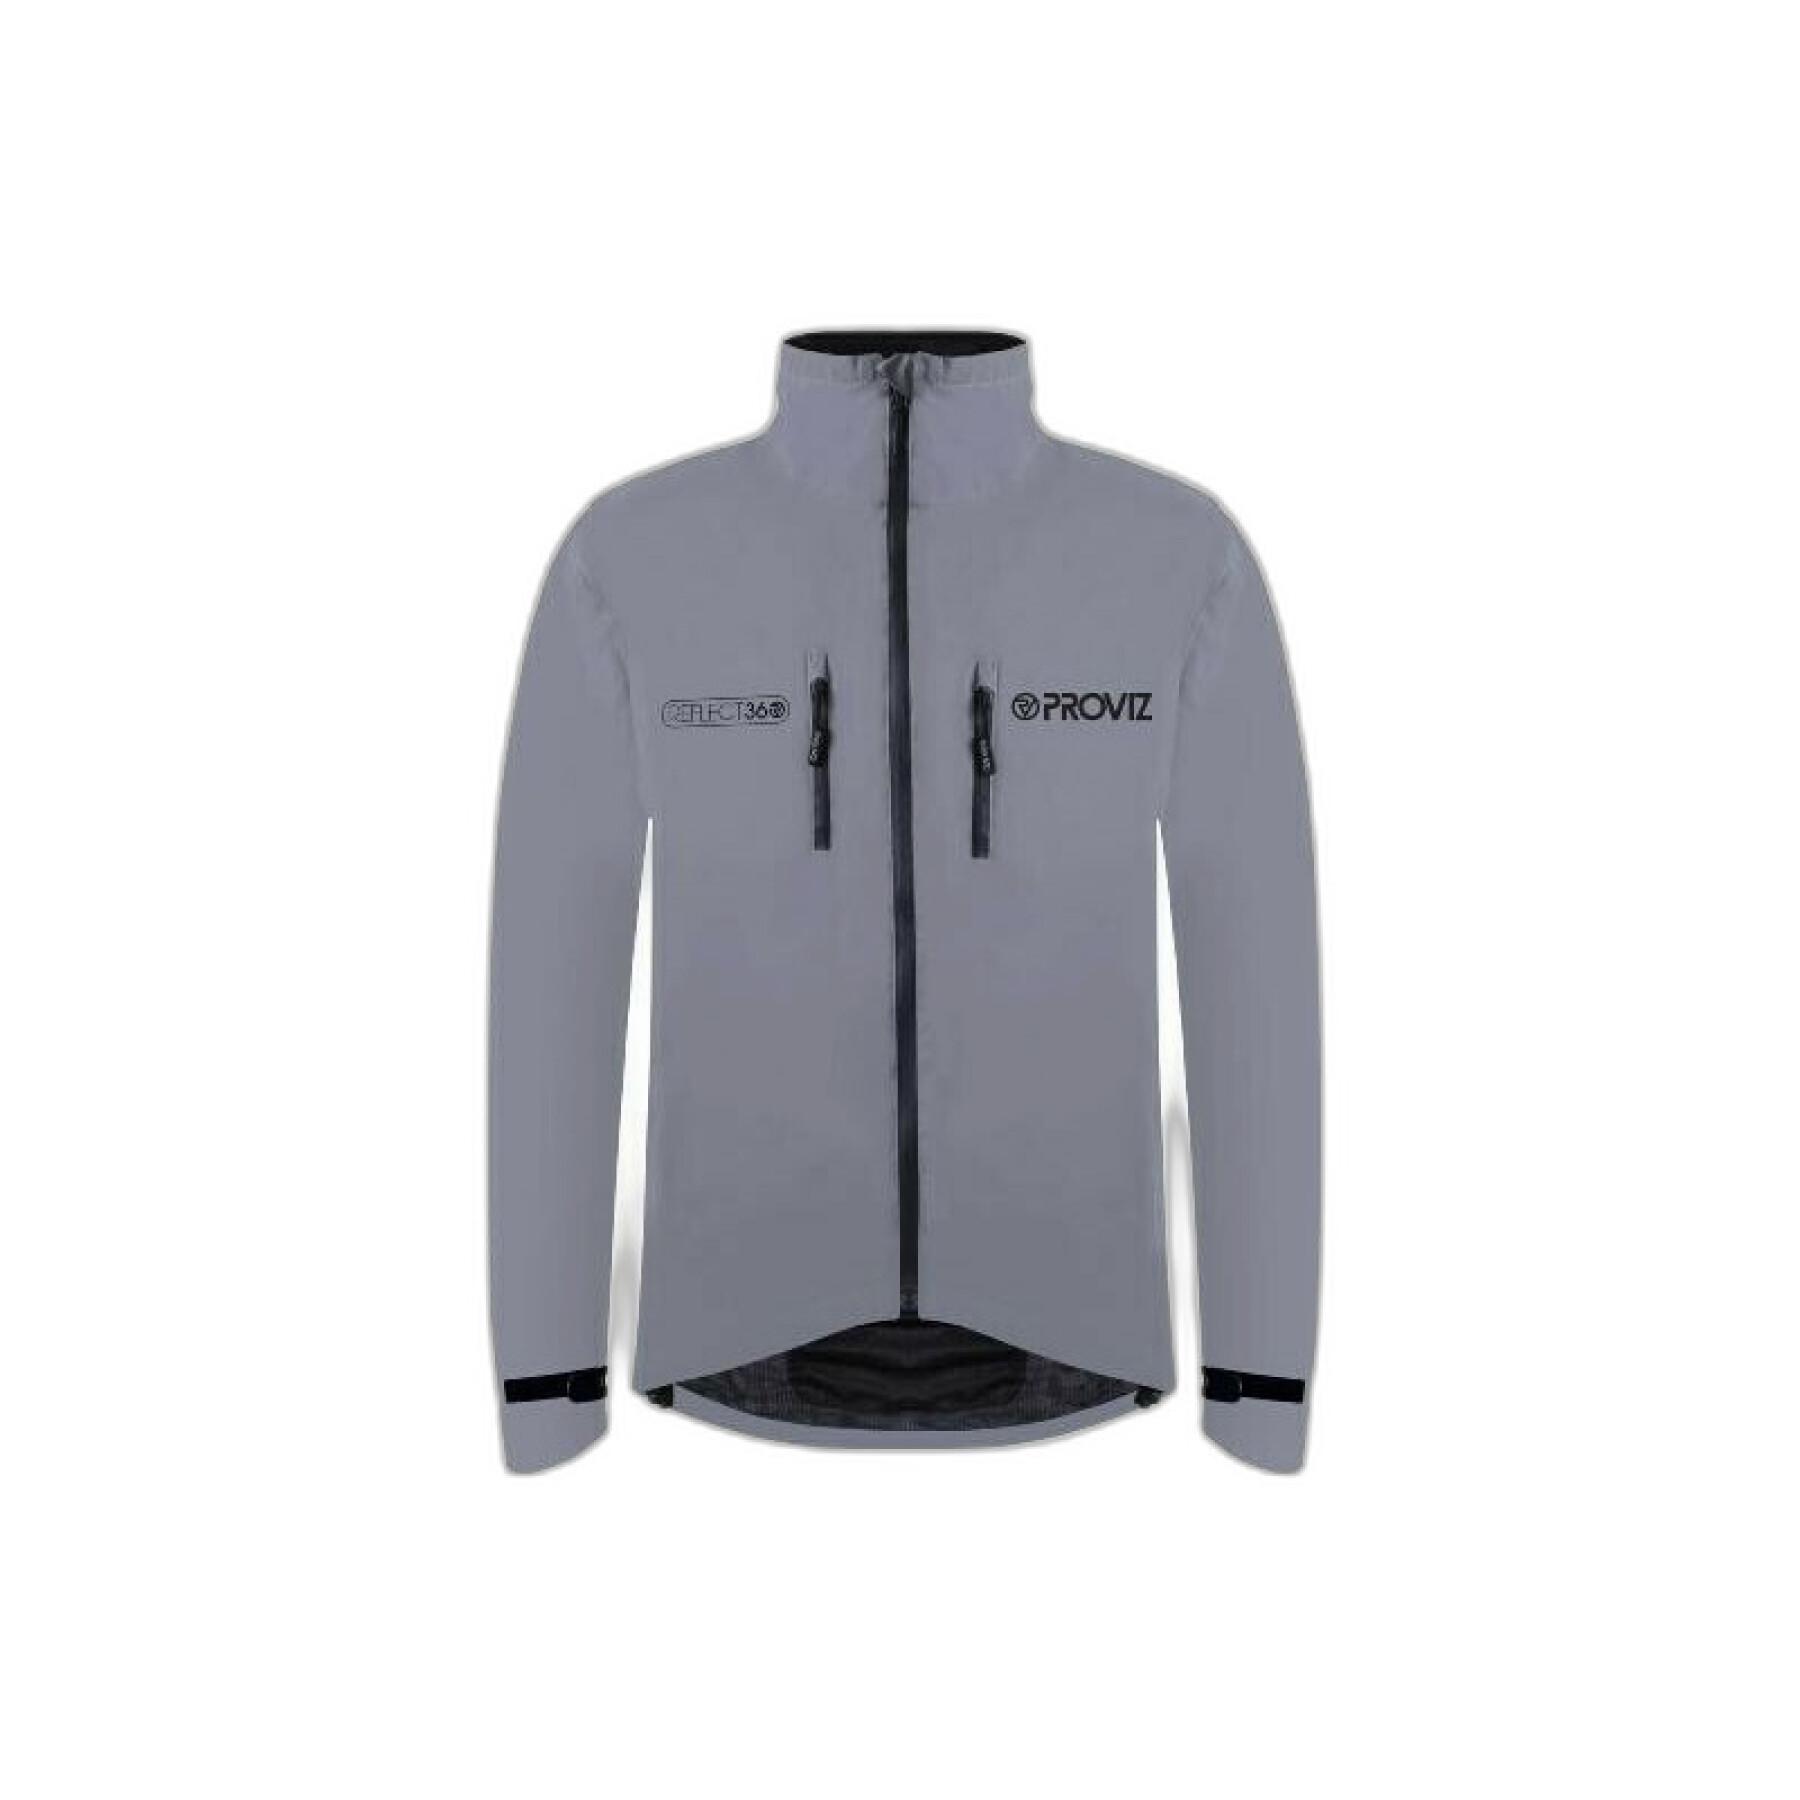 Technical breathable and reflective jacket without hood Proviz commuting